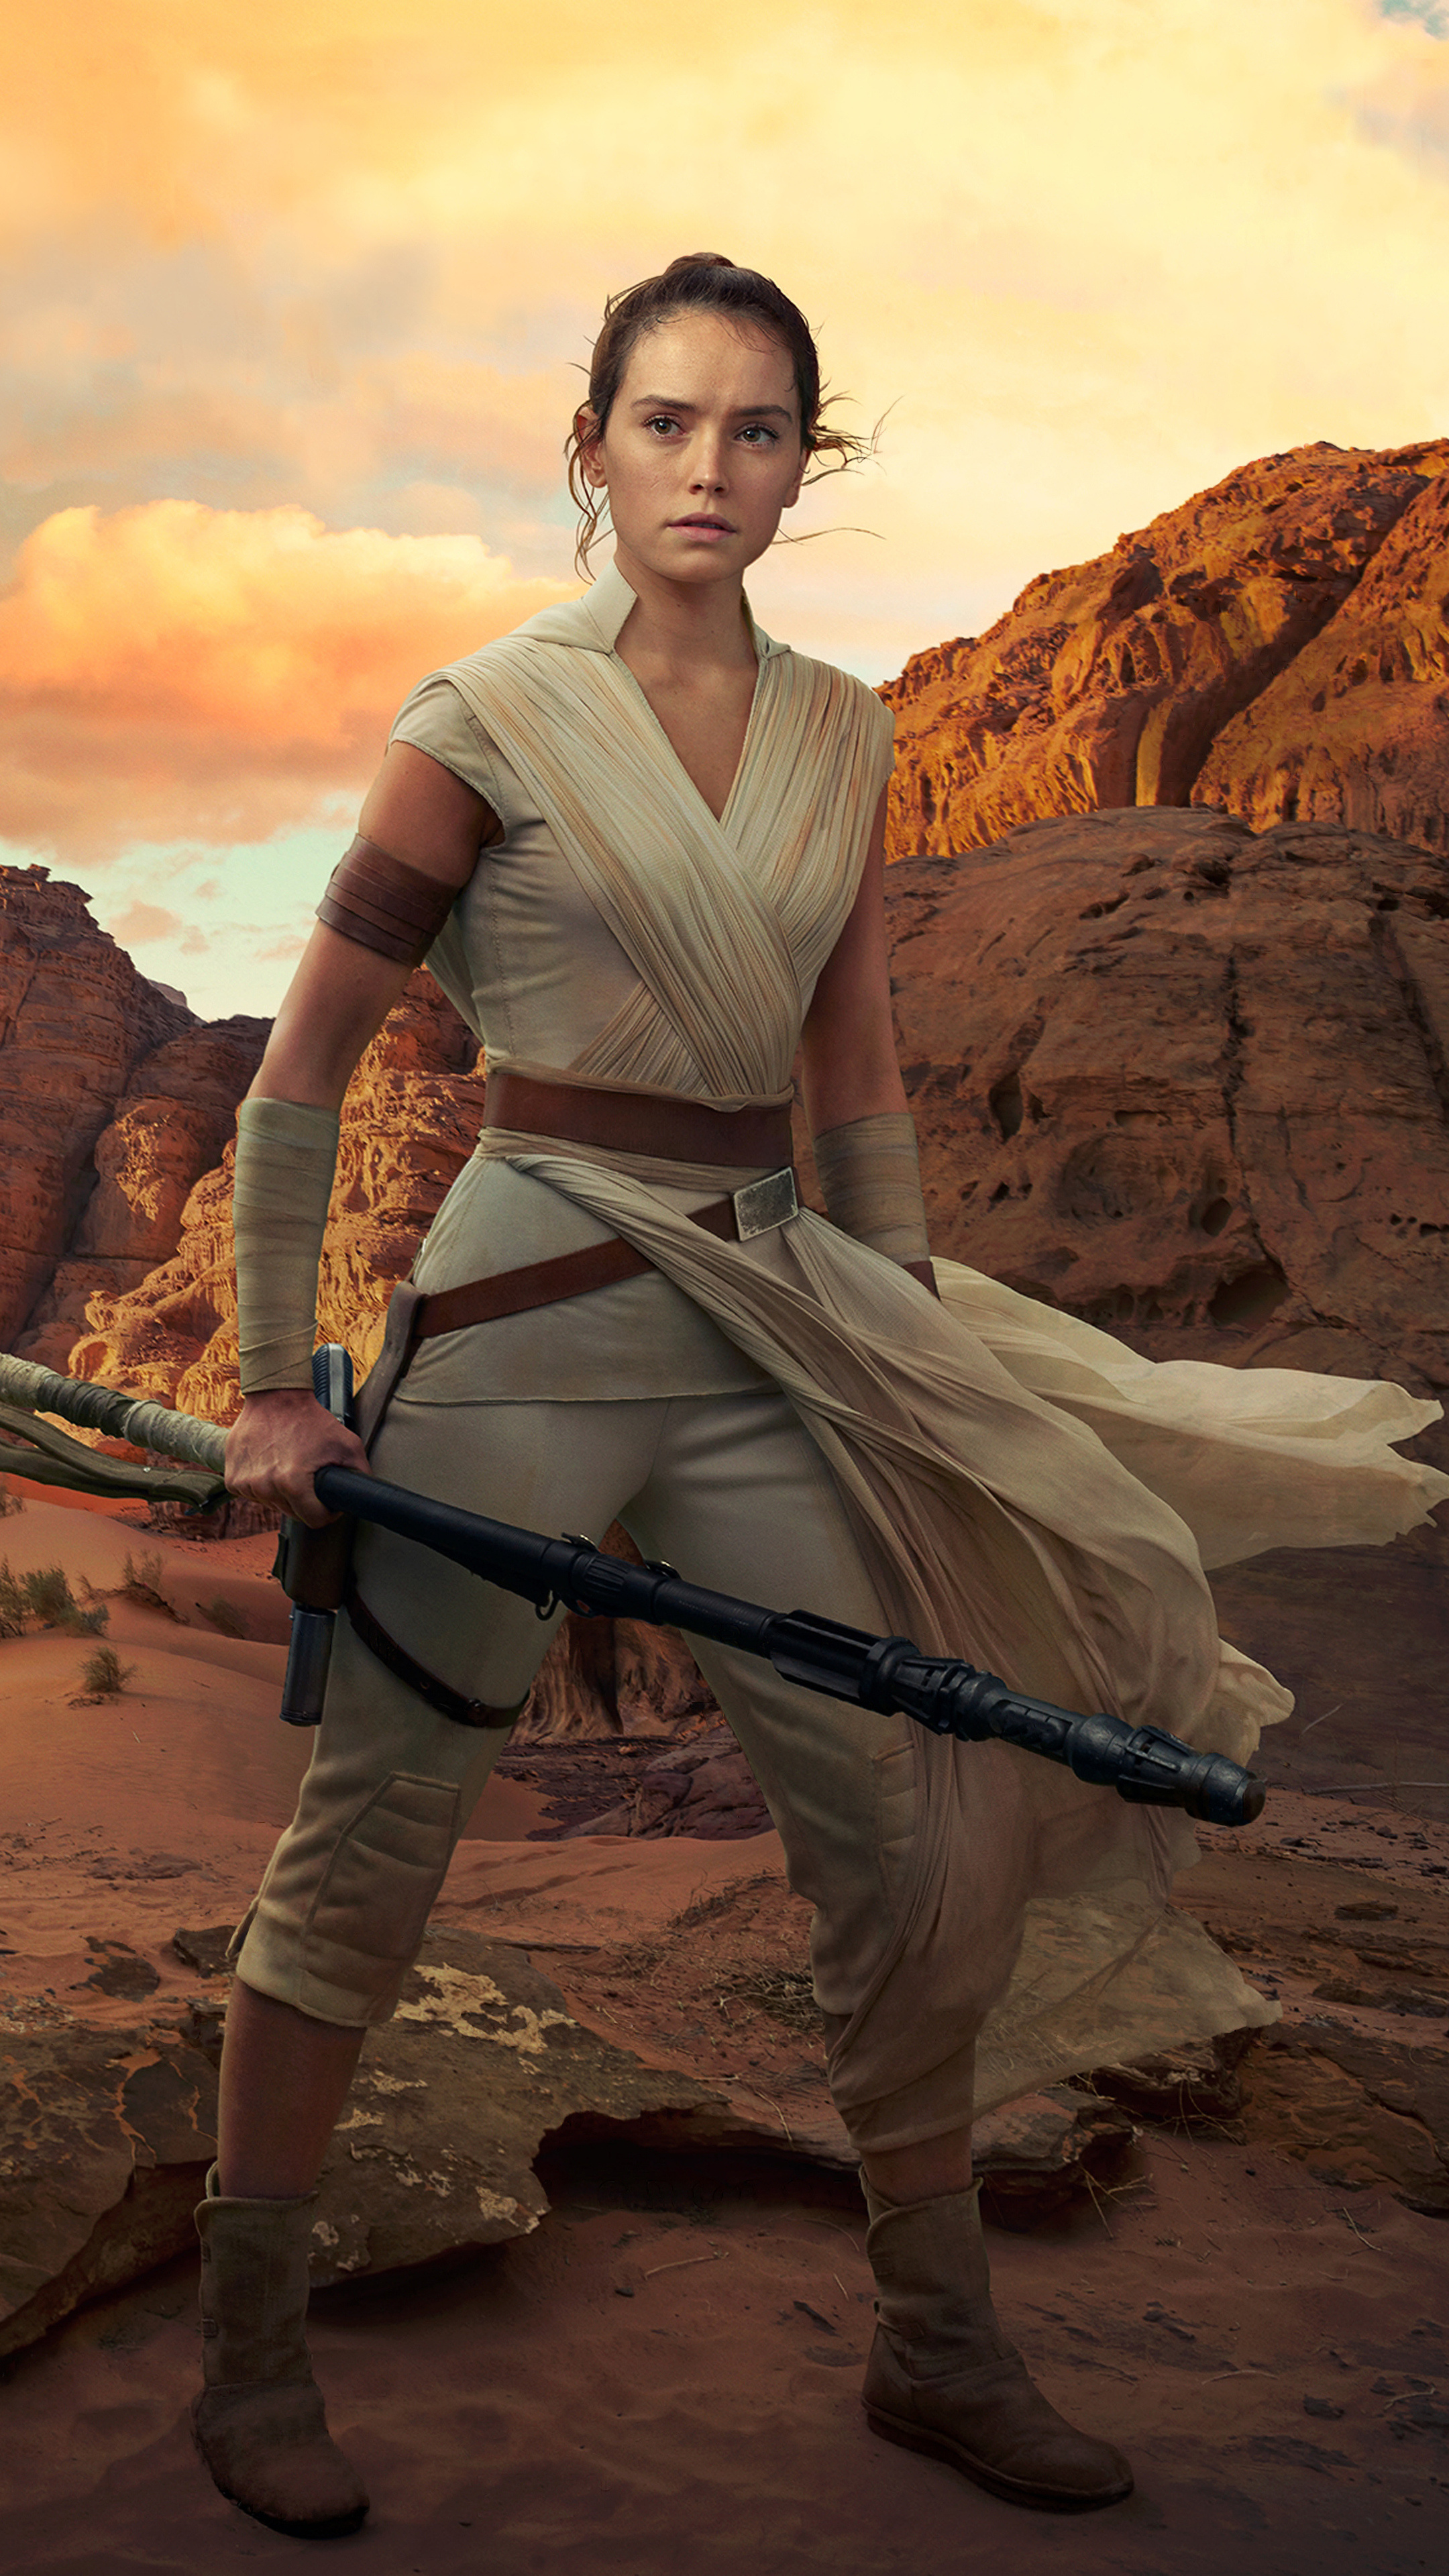 Rey (Star Wars), The Rise of Skywalker, Sony Xperia wallpaper, HD 4K image, 2160x3840 4K Phone